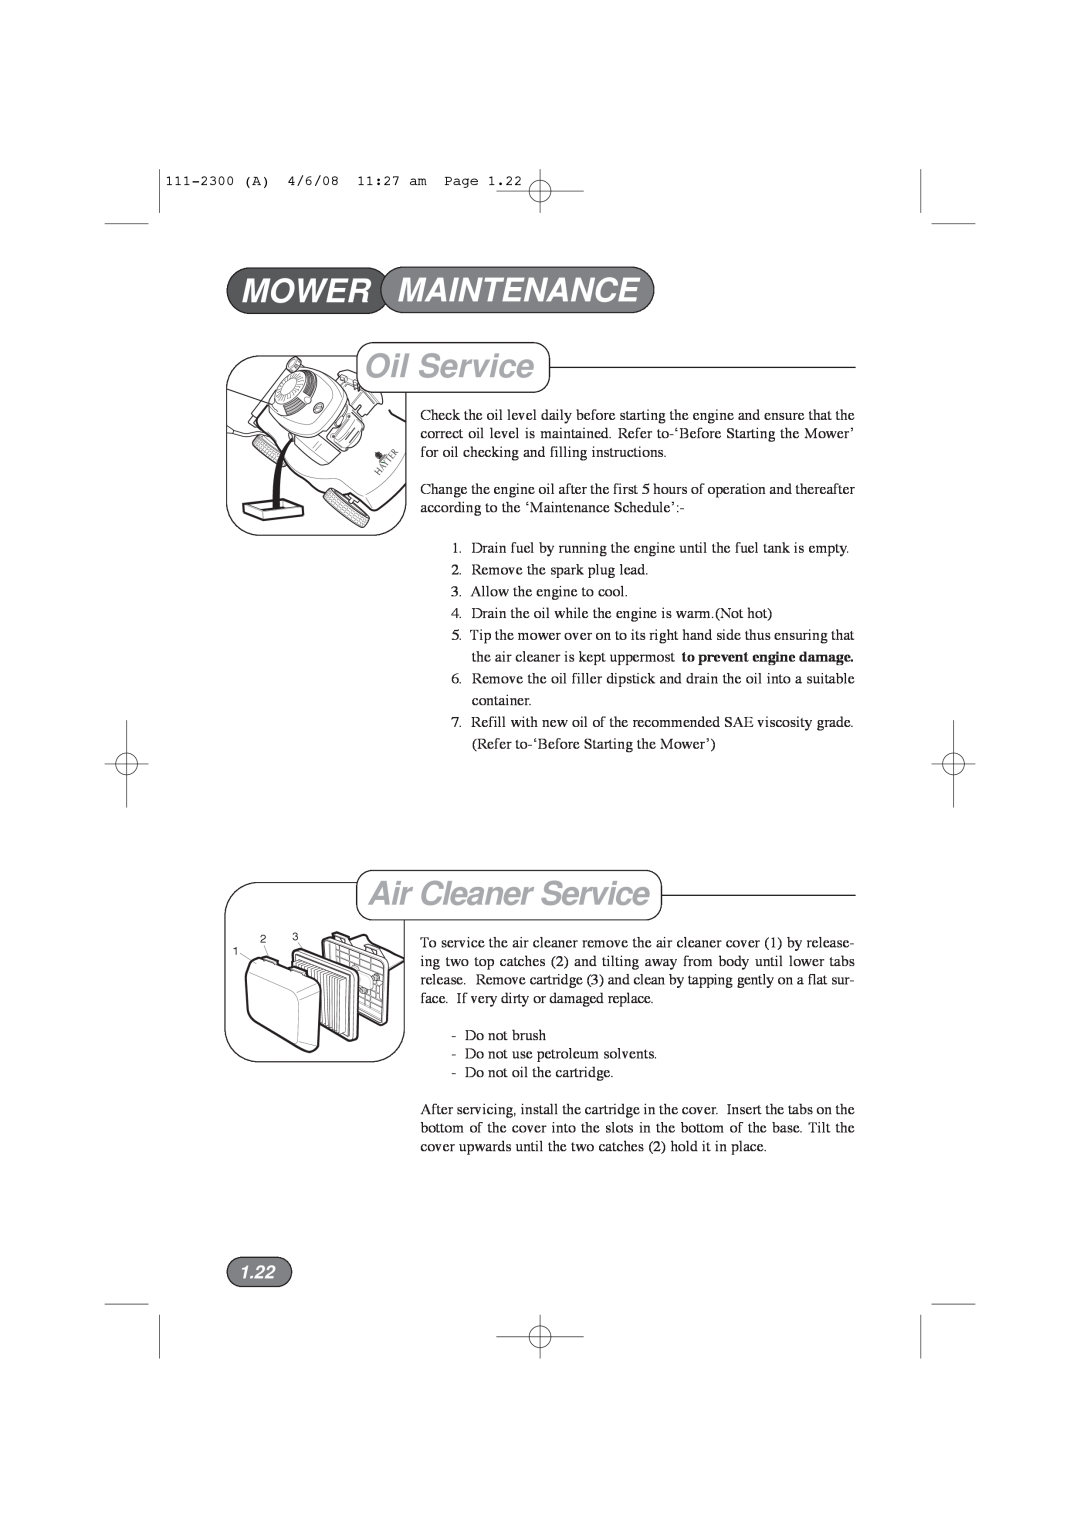 Hayter Mowers 43F manual Oil Service, Air Cleaner Service, 1.22, Mower Maintenance 